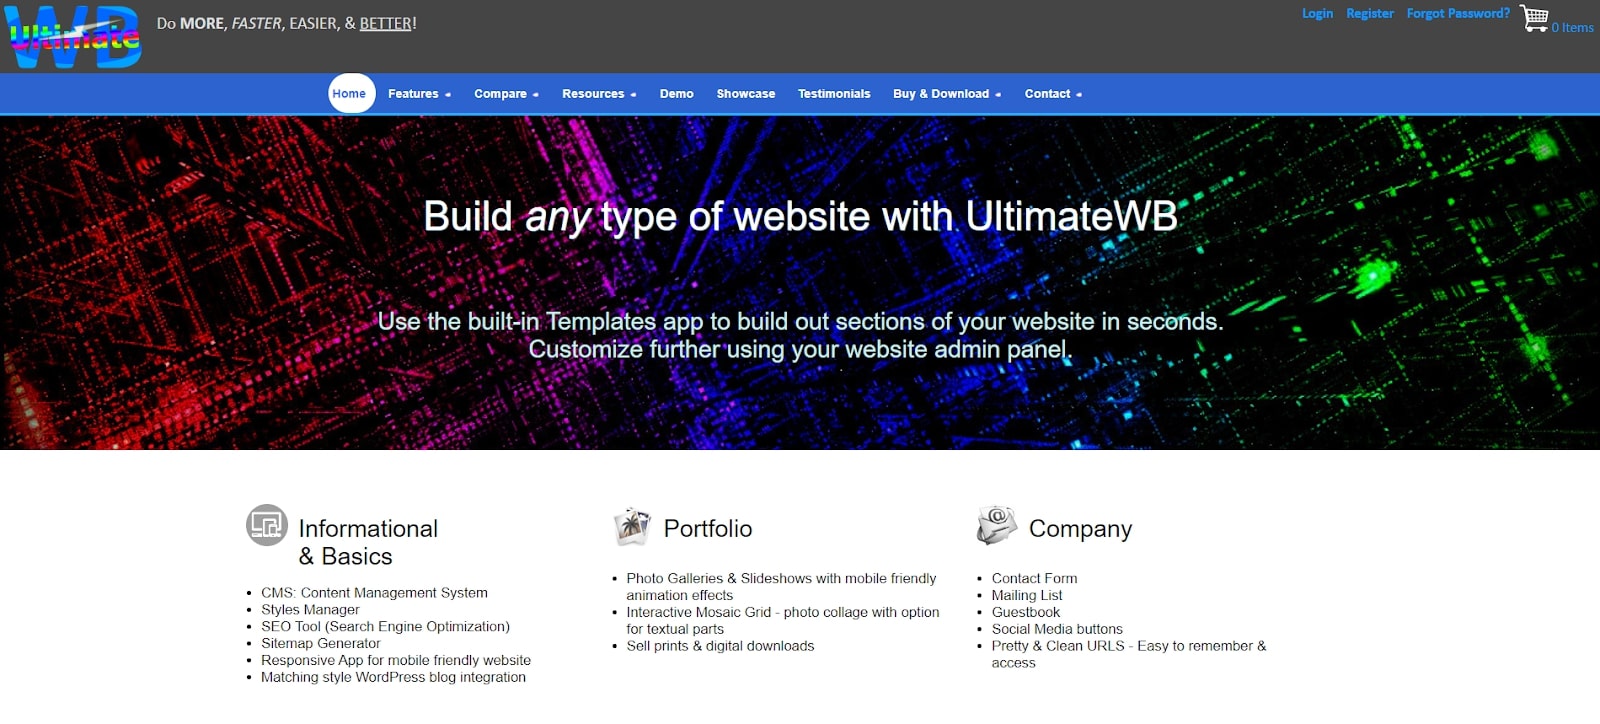 Ultimate Web website builder review